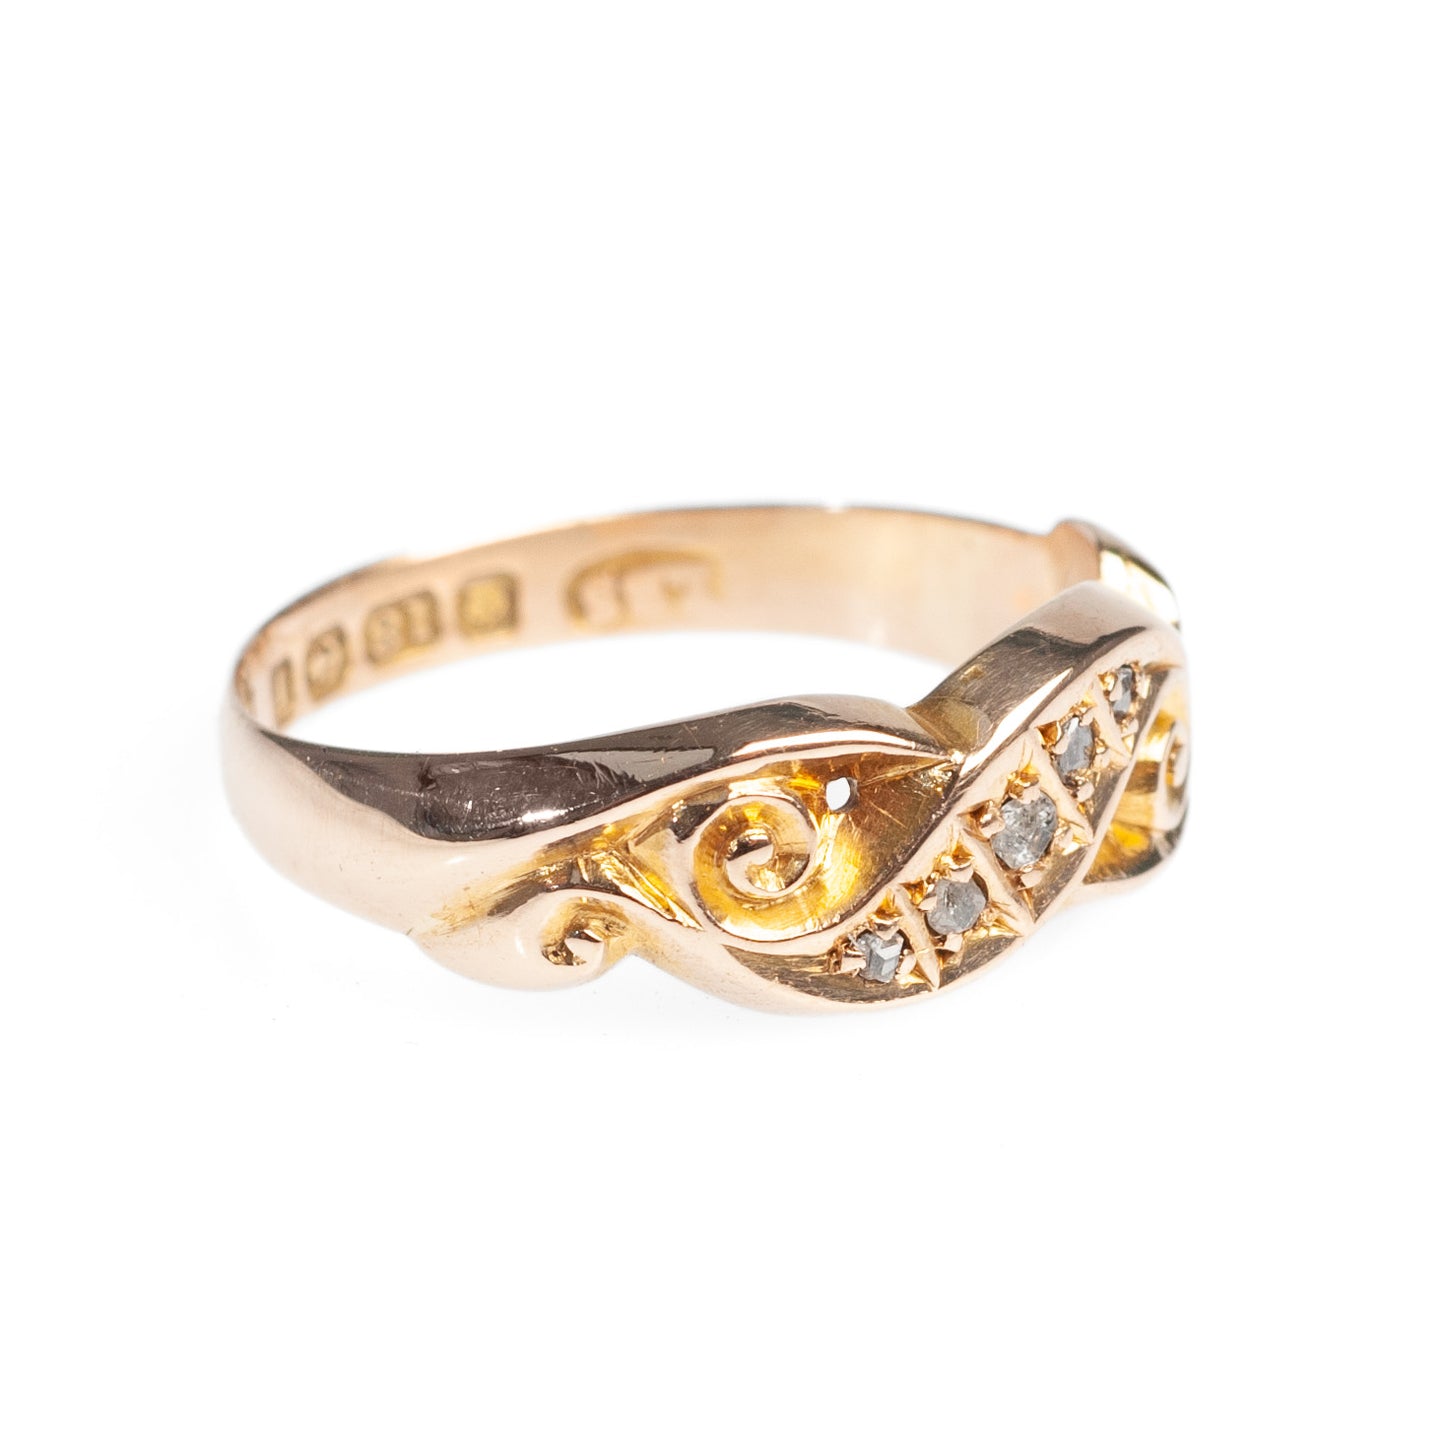 Antique 18ct Gold & Diamond Victorian Ring Hallmarked 1883 Size K  (Code A452)